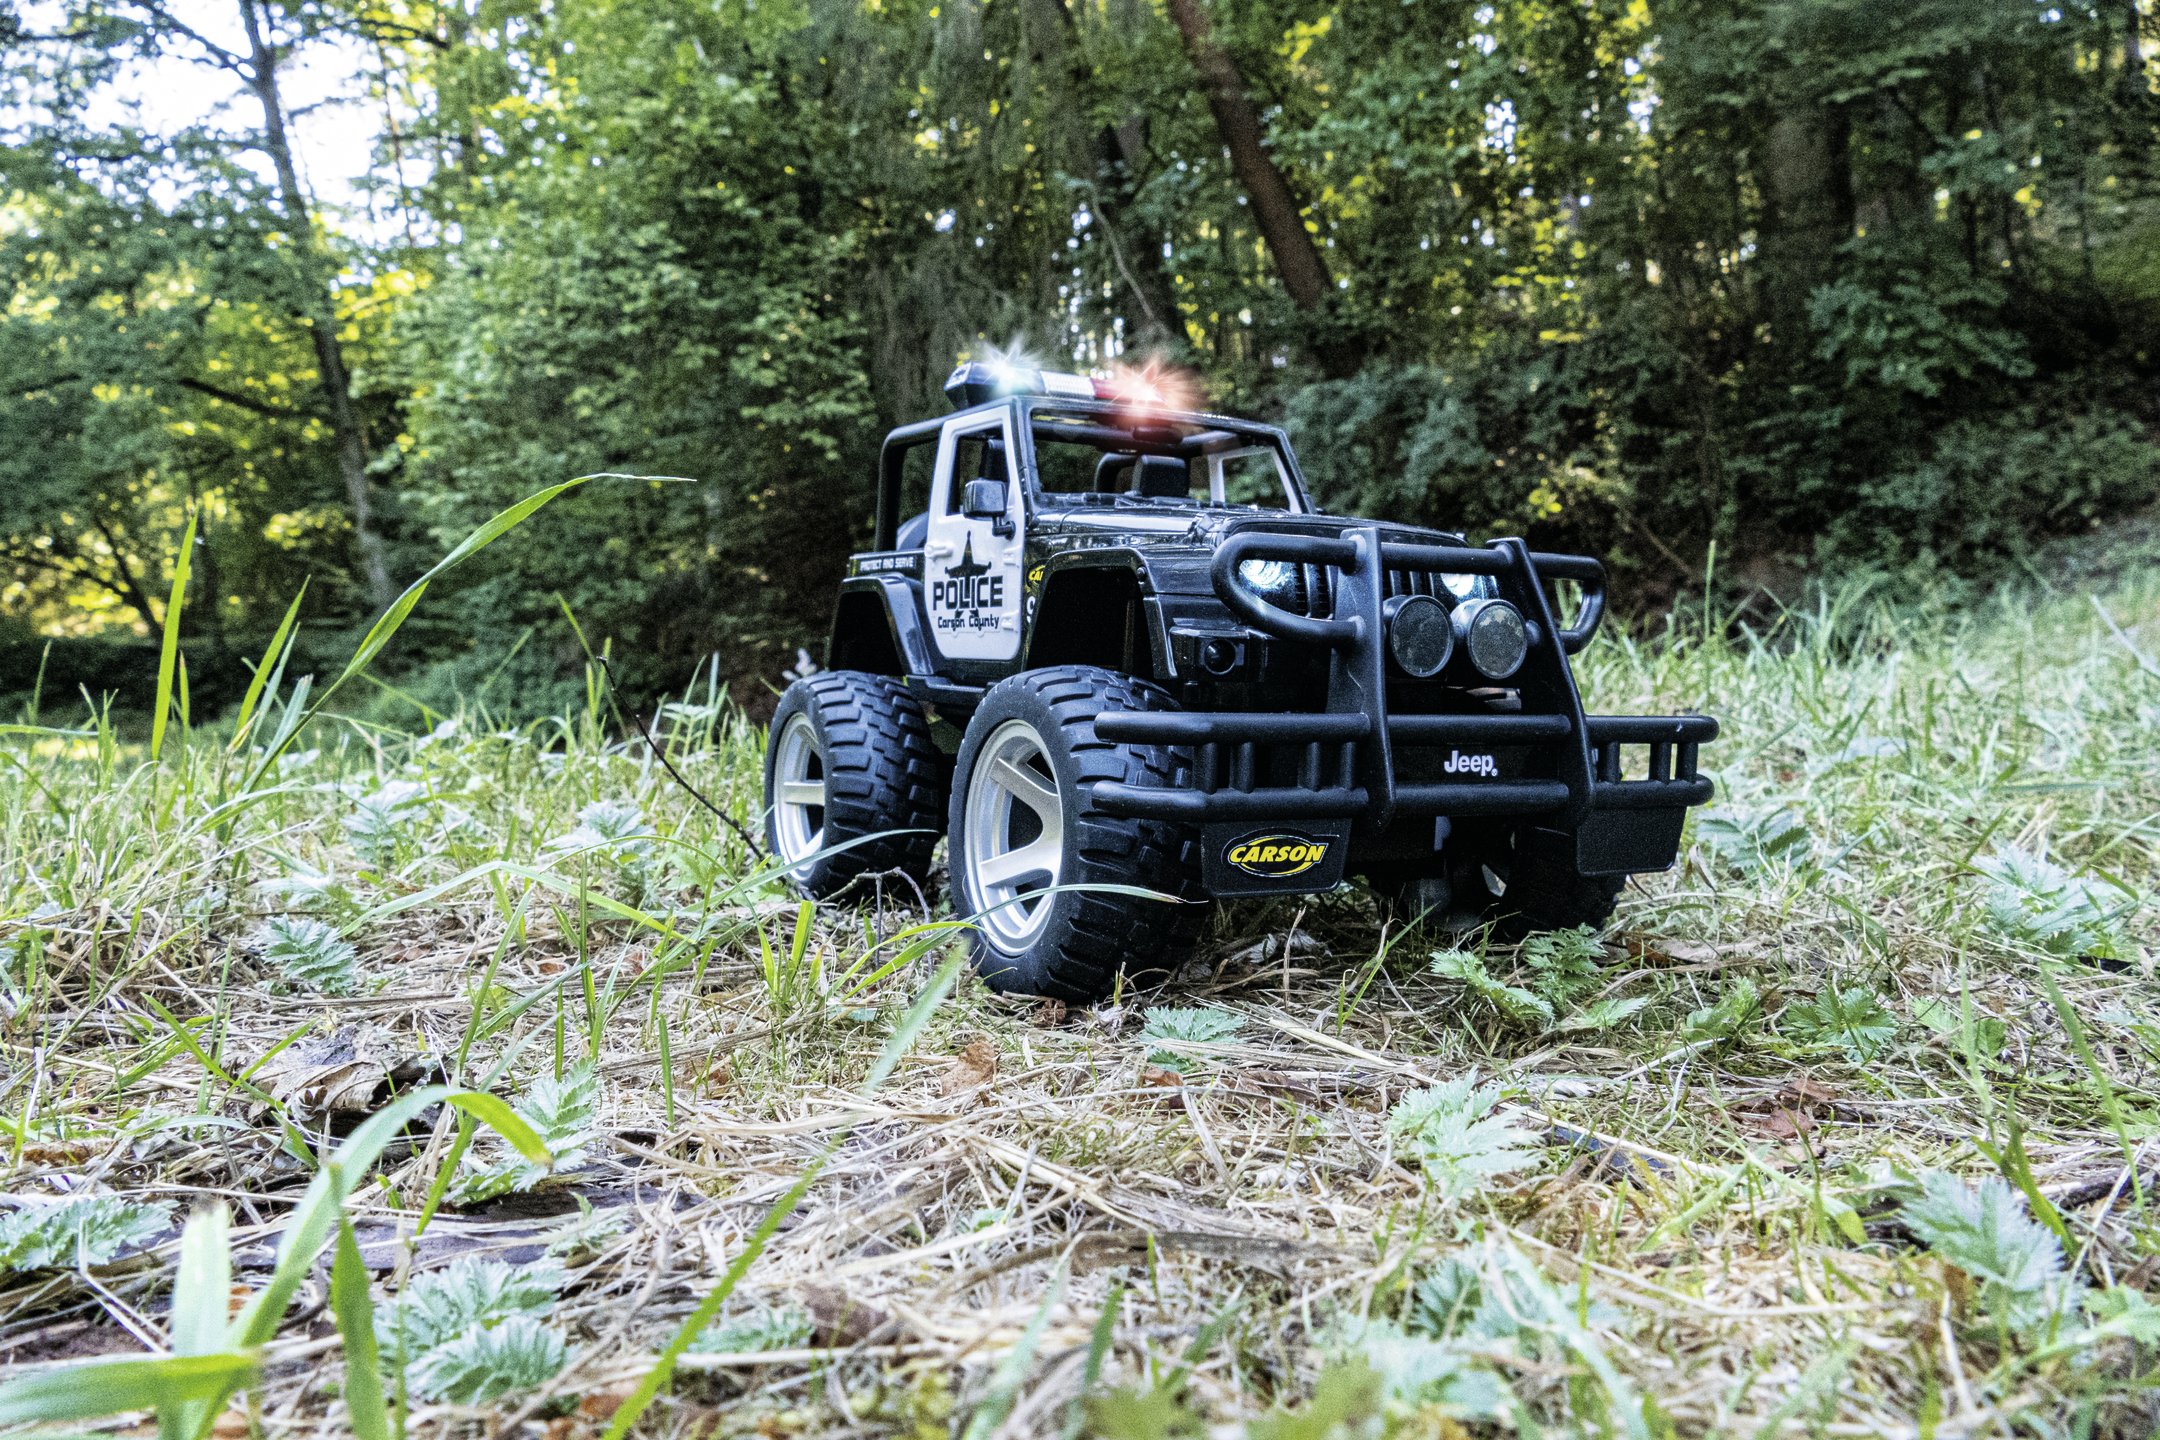 CARSON 1:12 Jeep 100% Mehrfarbig Spielzeugauto, RTR 2.4G Wrangler R/C Police